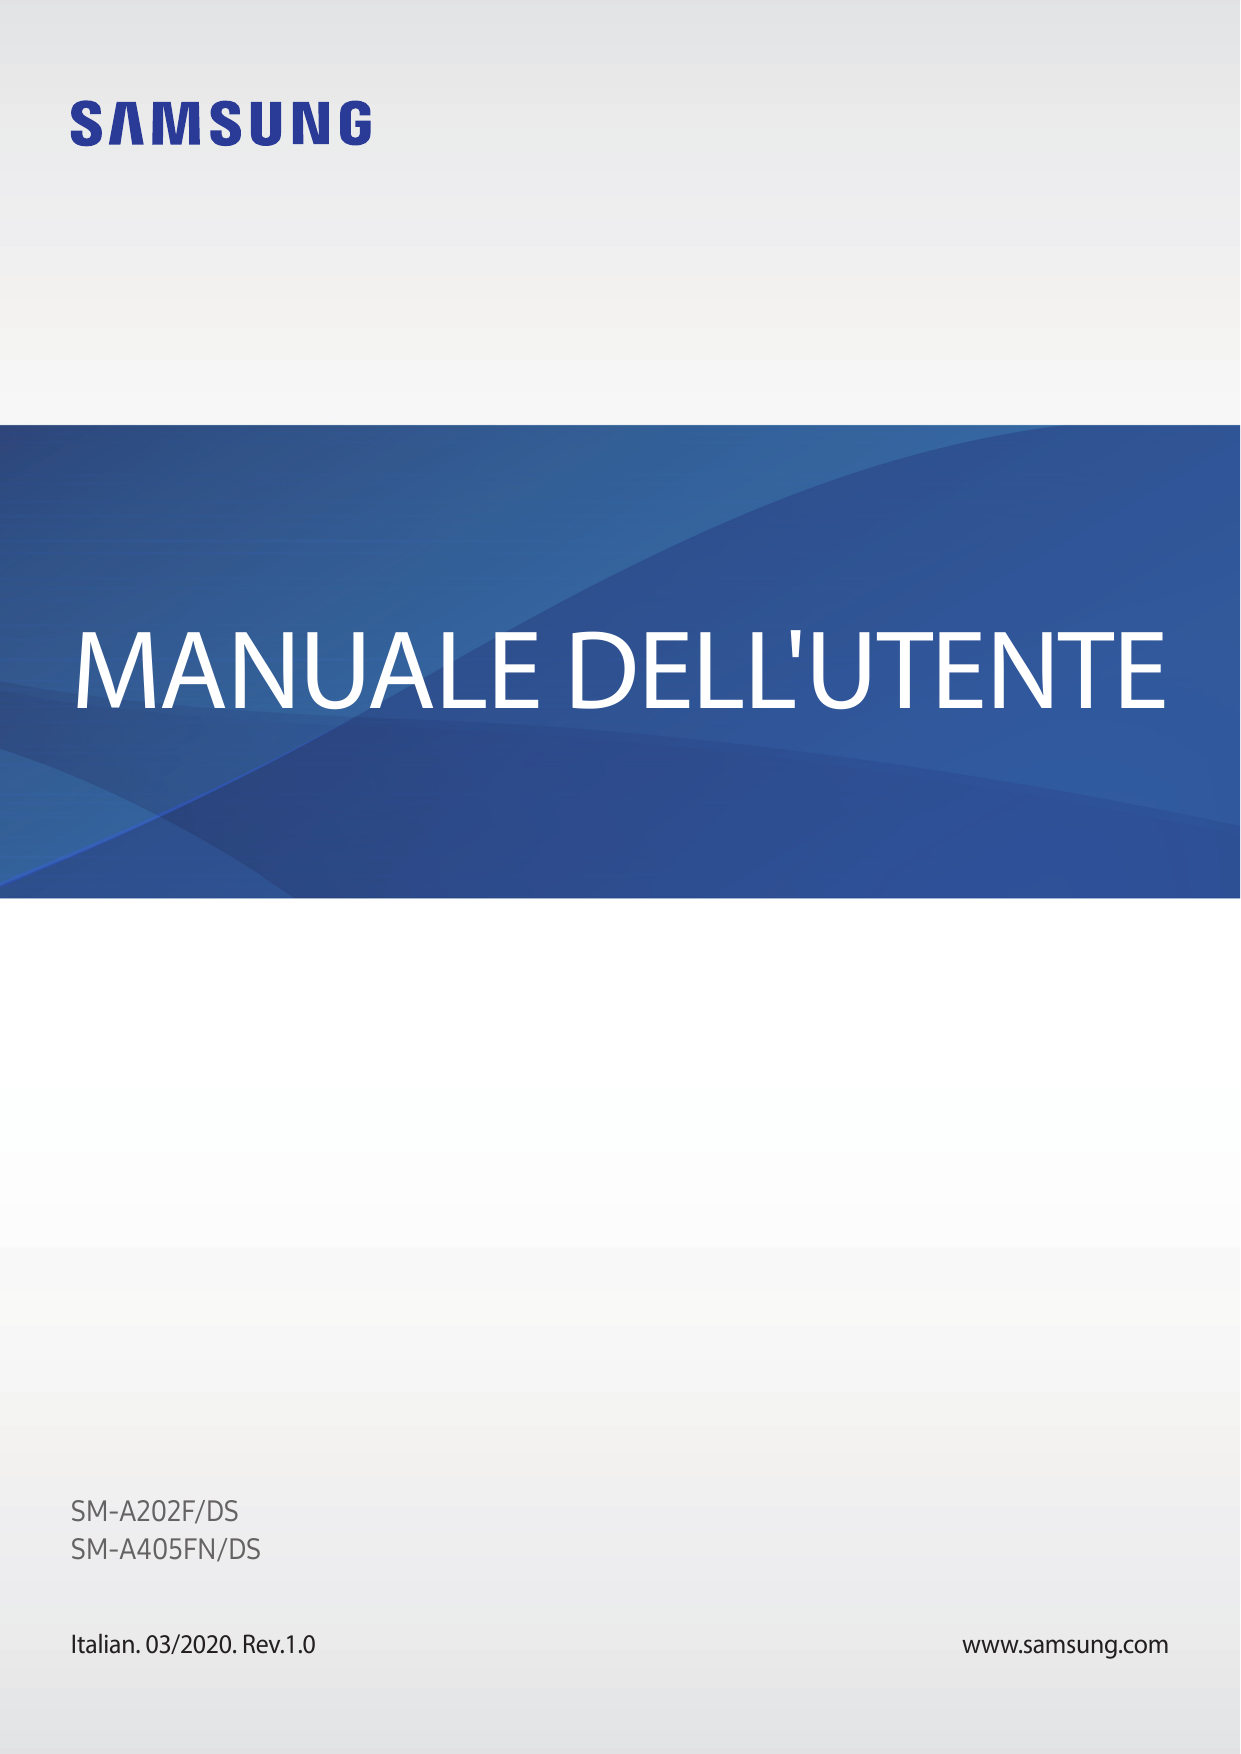 MANUALE DELL'UTENTESM-A202F/DSSM-A405FN/DSItalian. 03/2020. Rev.1.0www.samsung.com